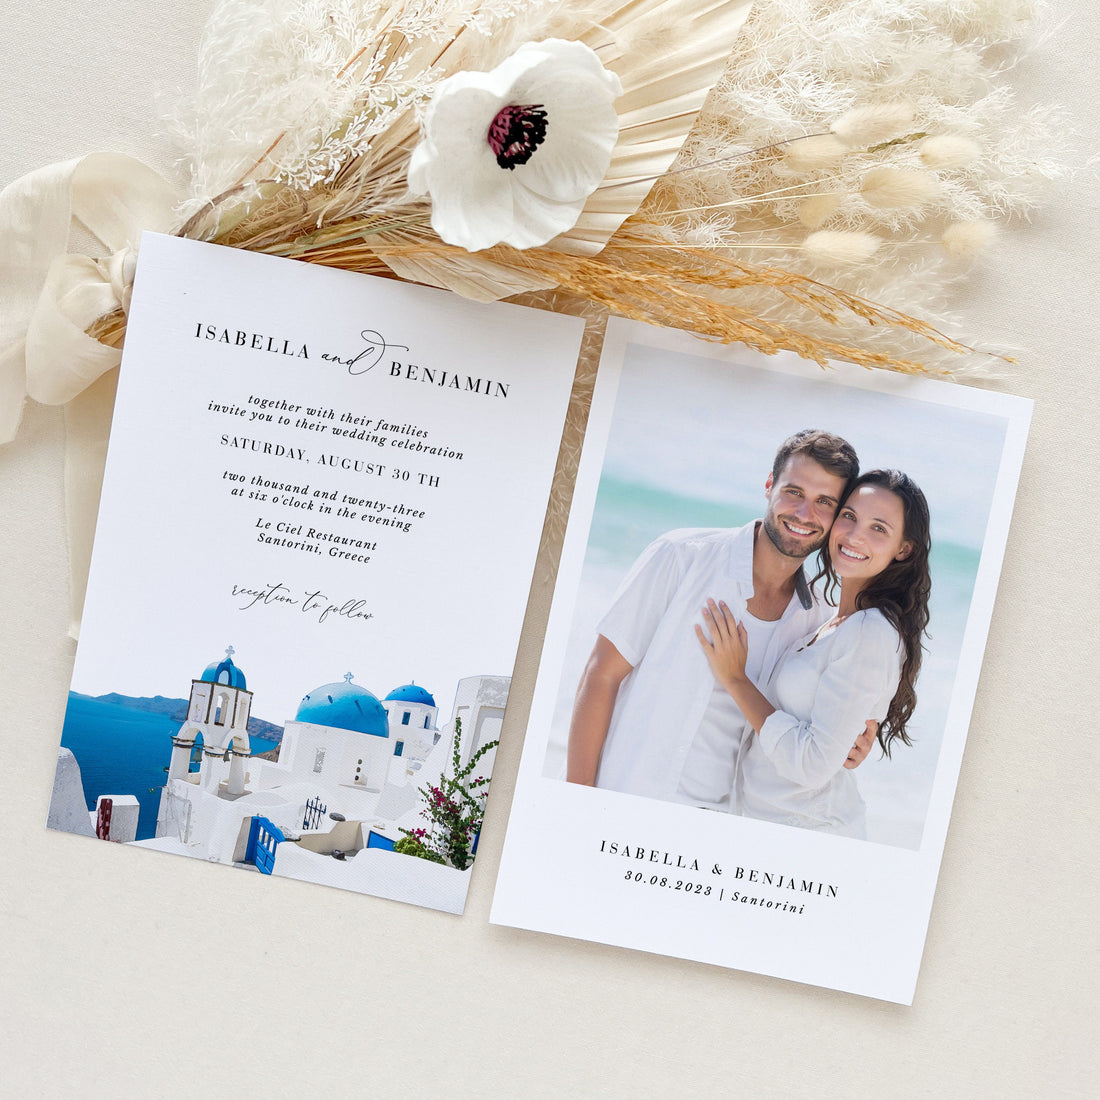 SANTORINI | Greek Wedding Invitation Template